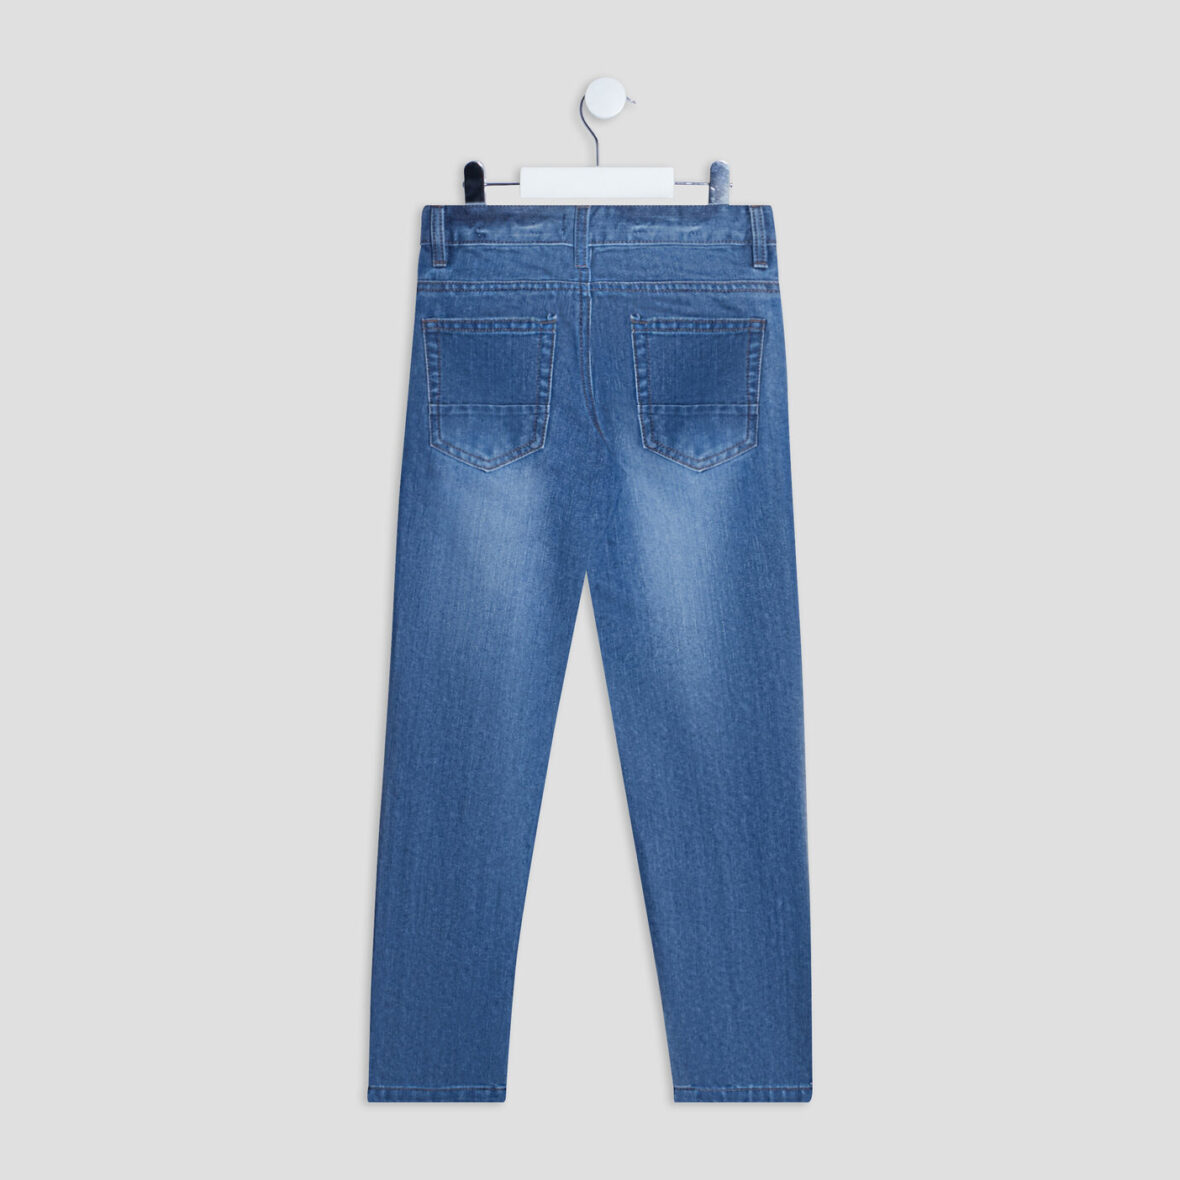 jeans-regular-effet-delave-denim-double-stone-garcon-a-36165600412110425